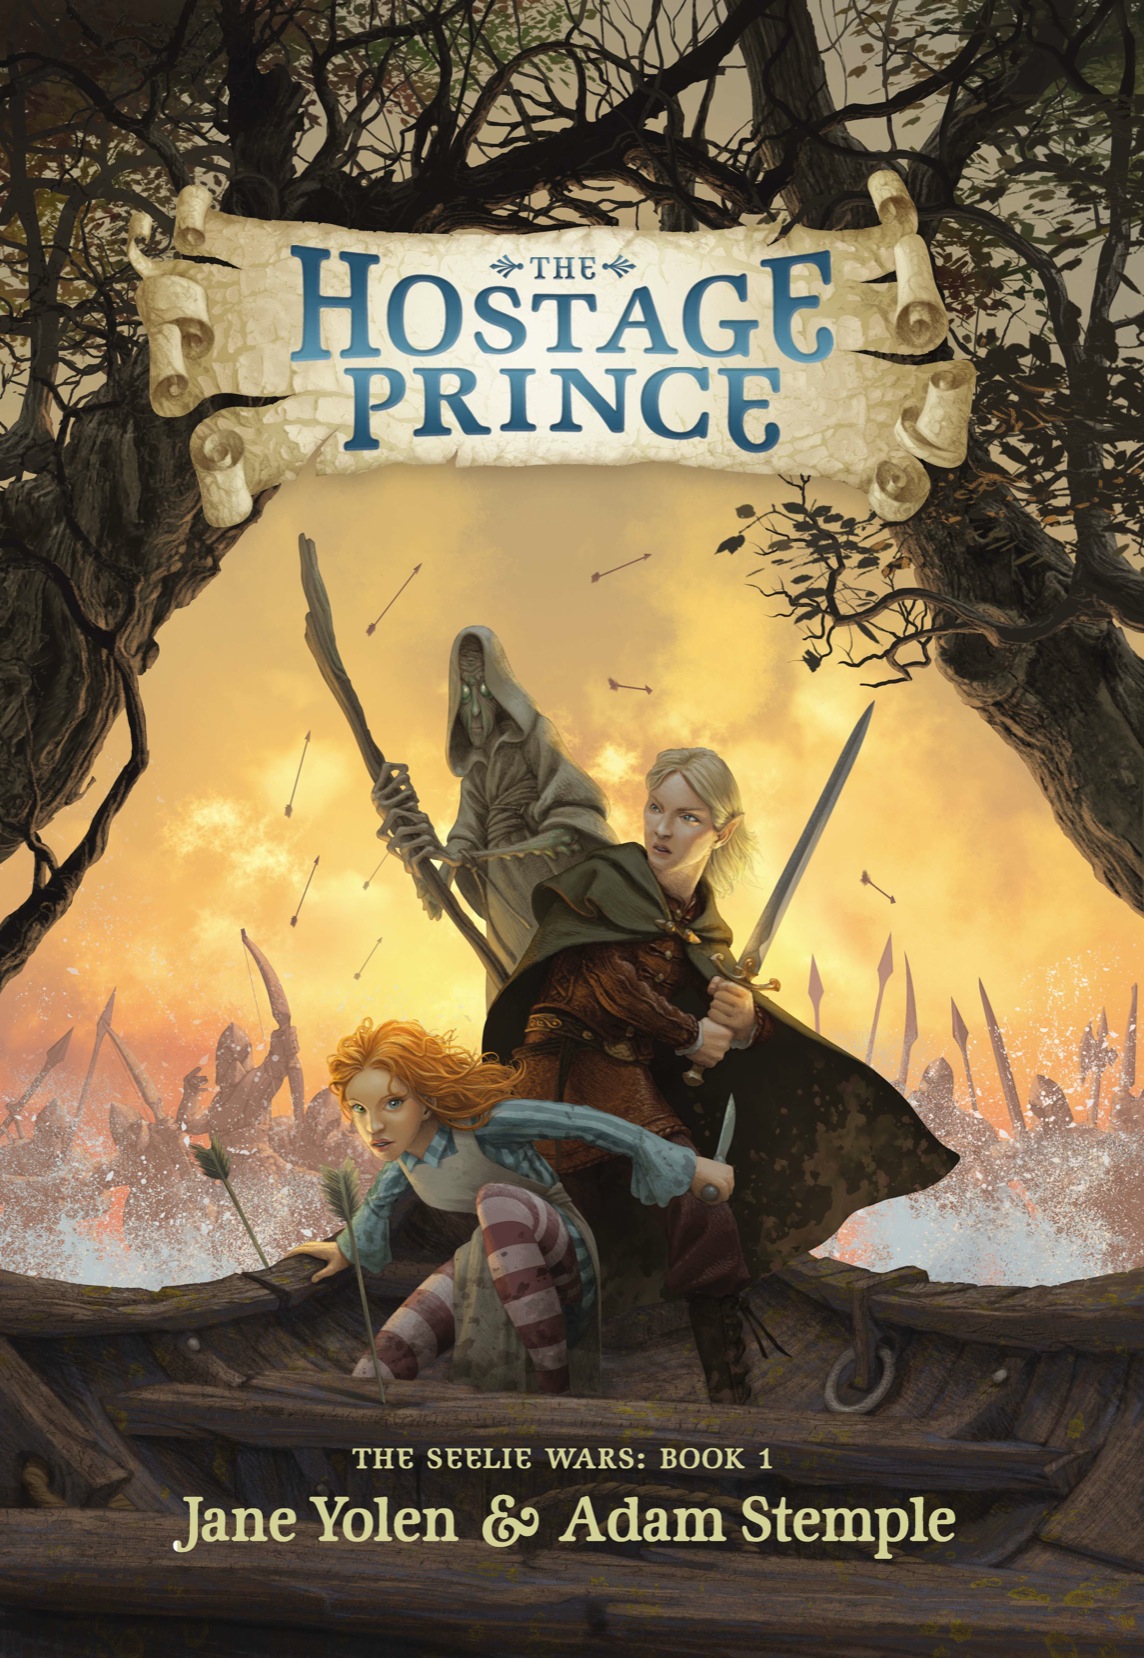 The Hostage Prince (2013) by Jane Yolen